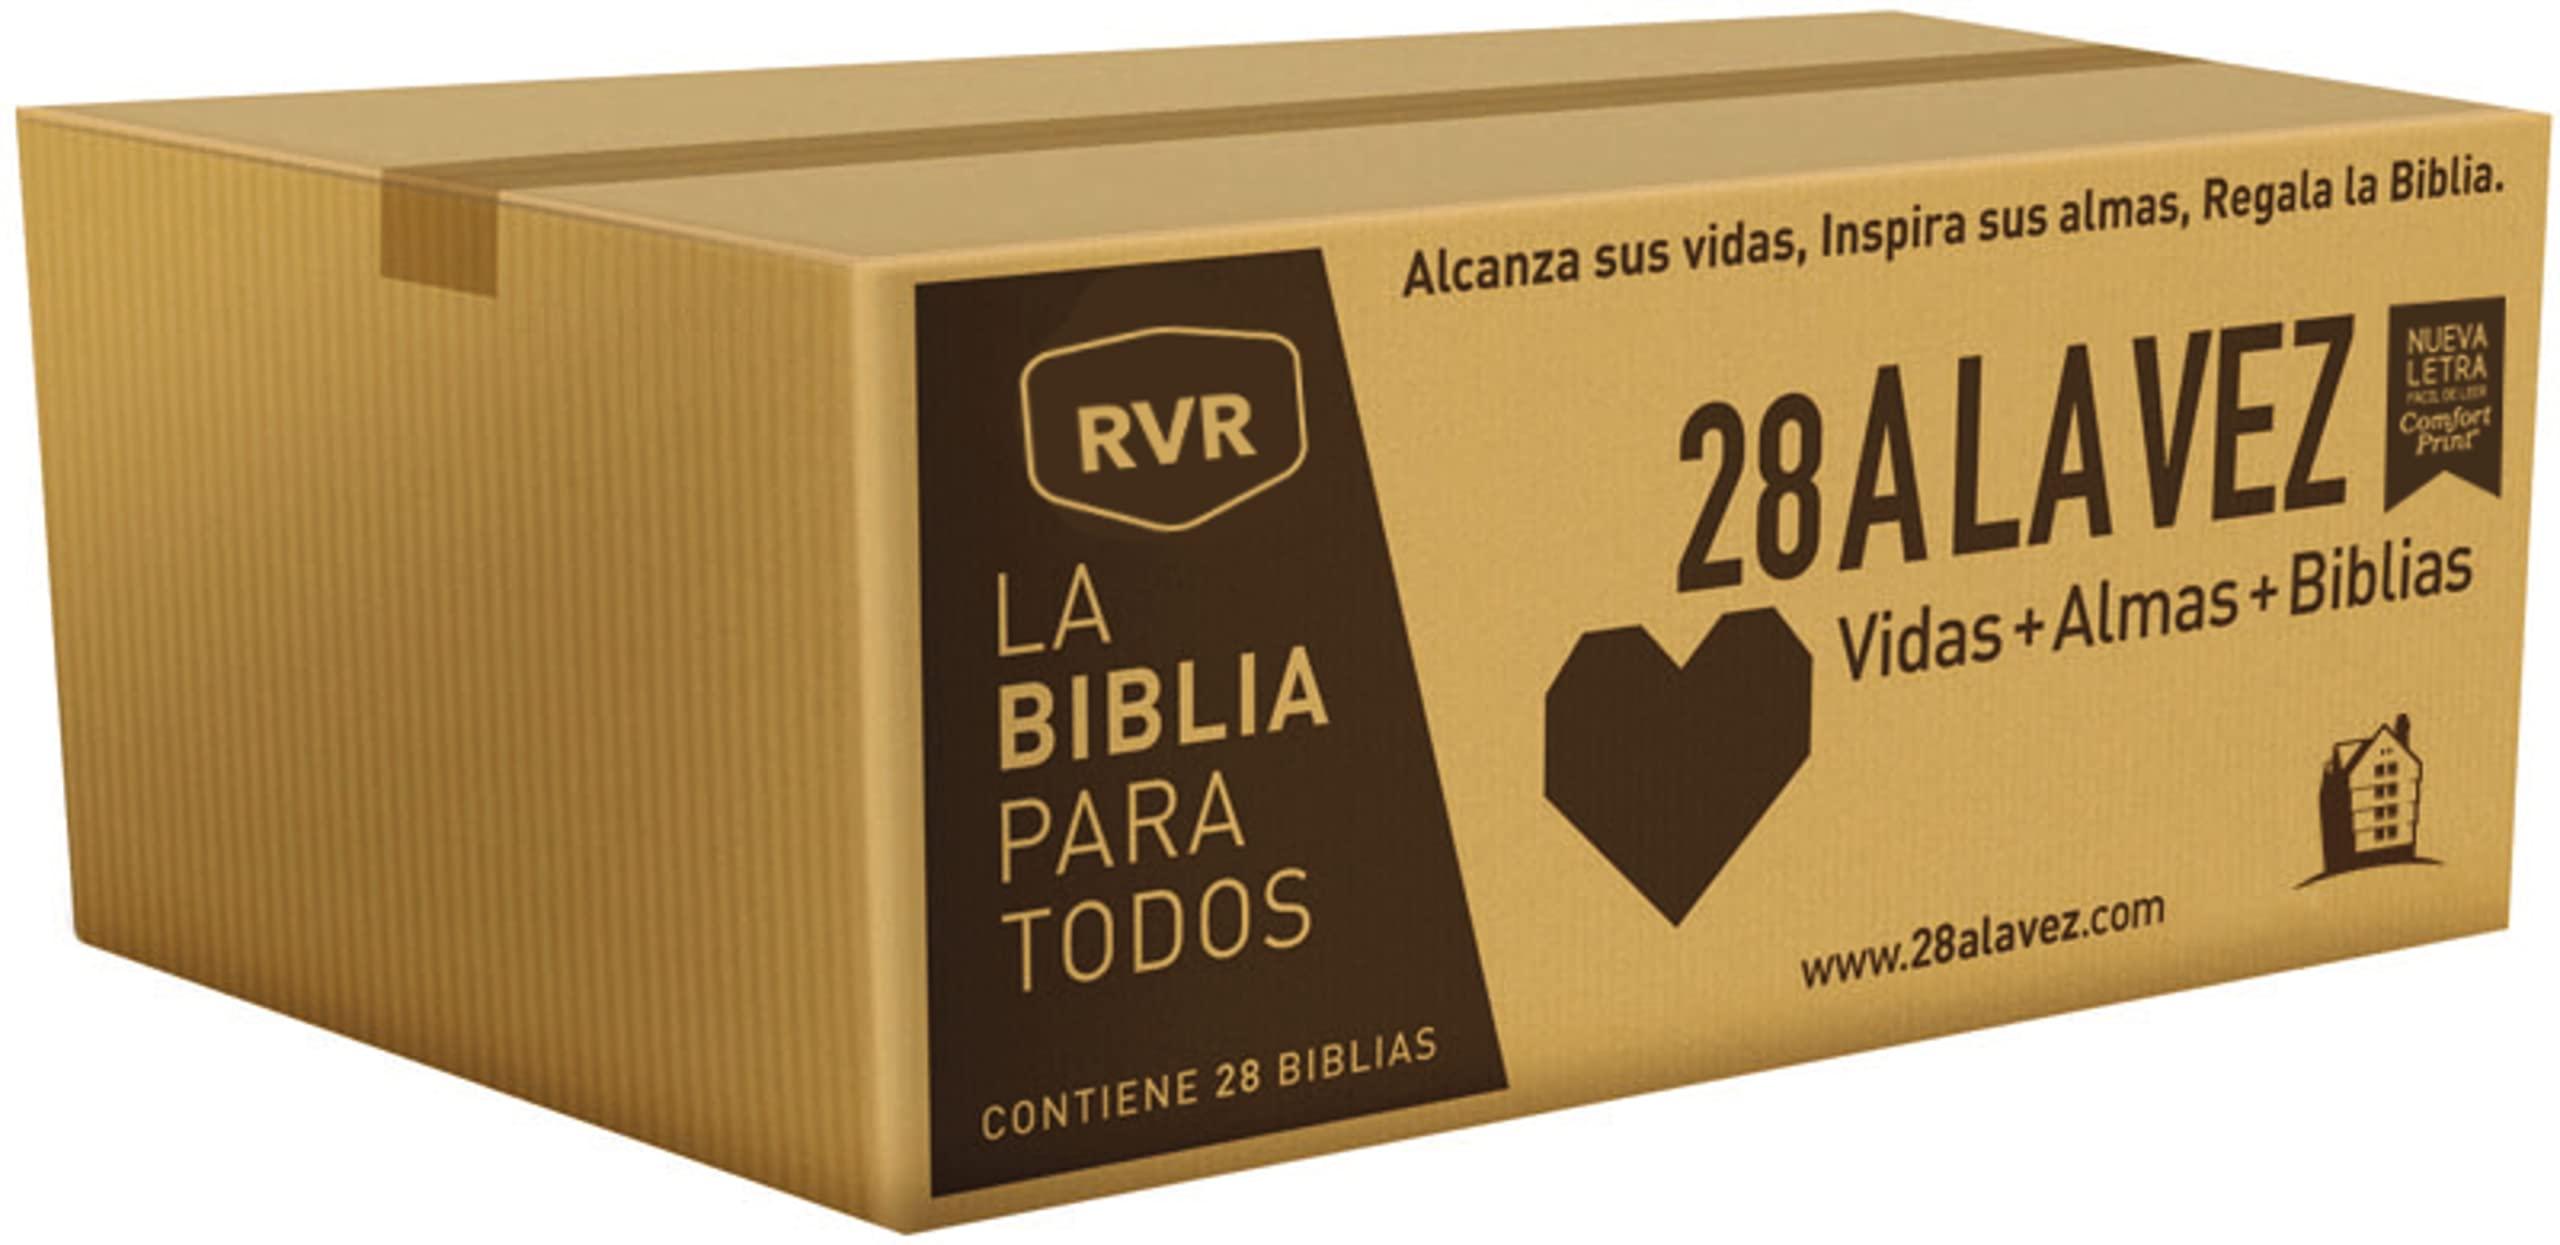 RVR-Santa Biblia - Edición económica / Paquete de 28 (Spanish Edition) - Pura Vida Books